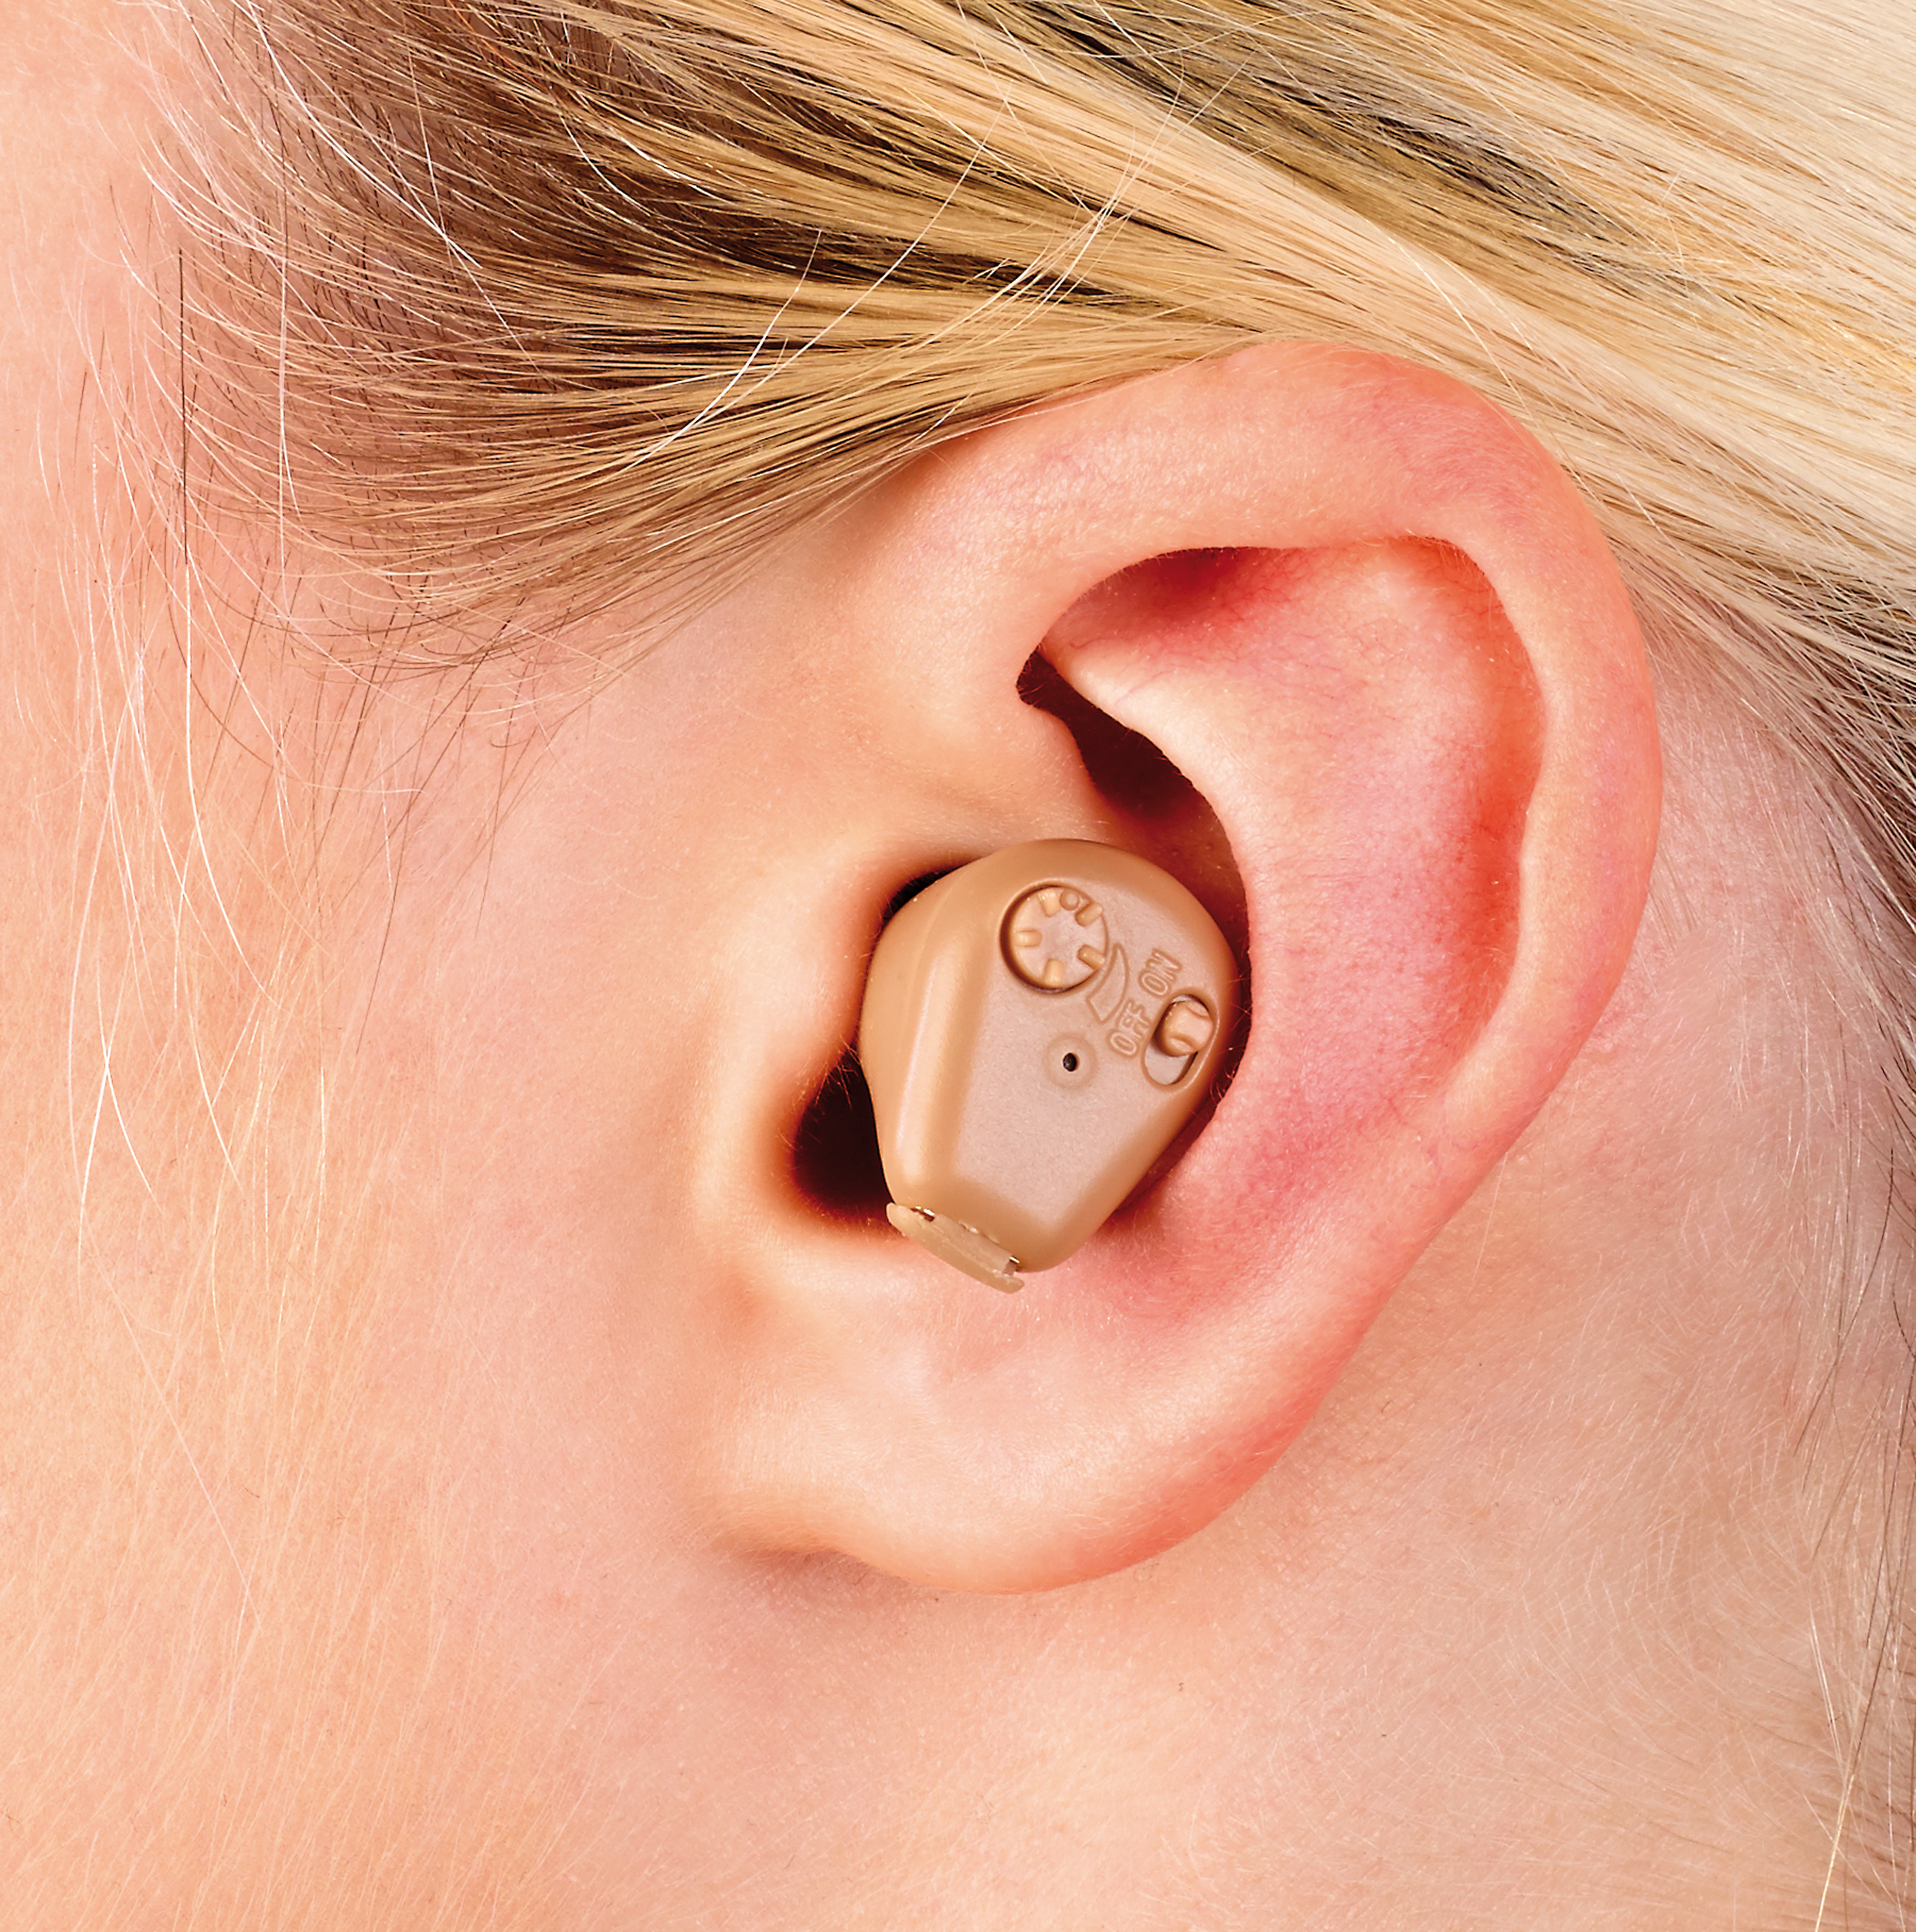 Ear hearing. Слуховой аппарат. Внутриканальный слуховой аппарат. Девочка со слуховым аппаратом. Стильные слуховые аппараты.